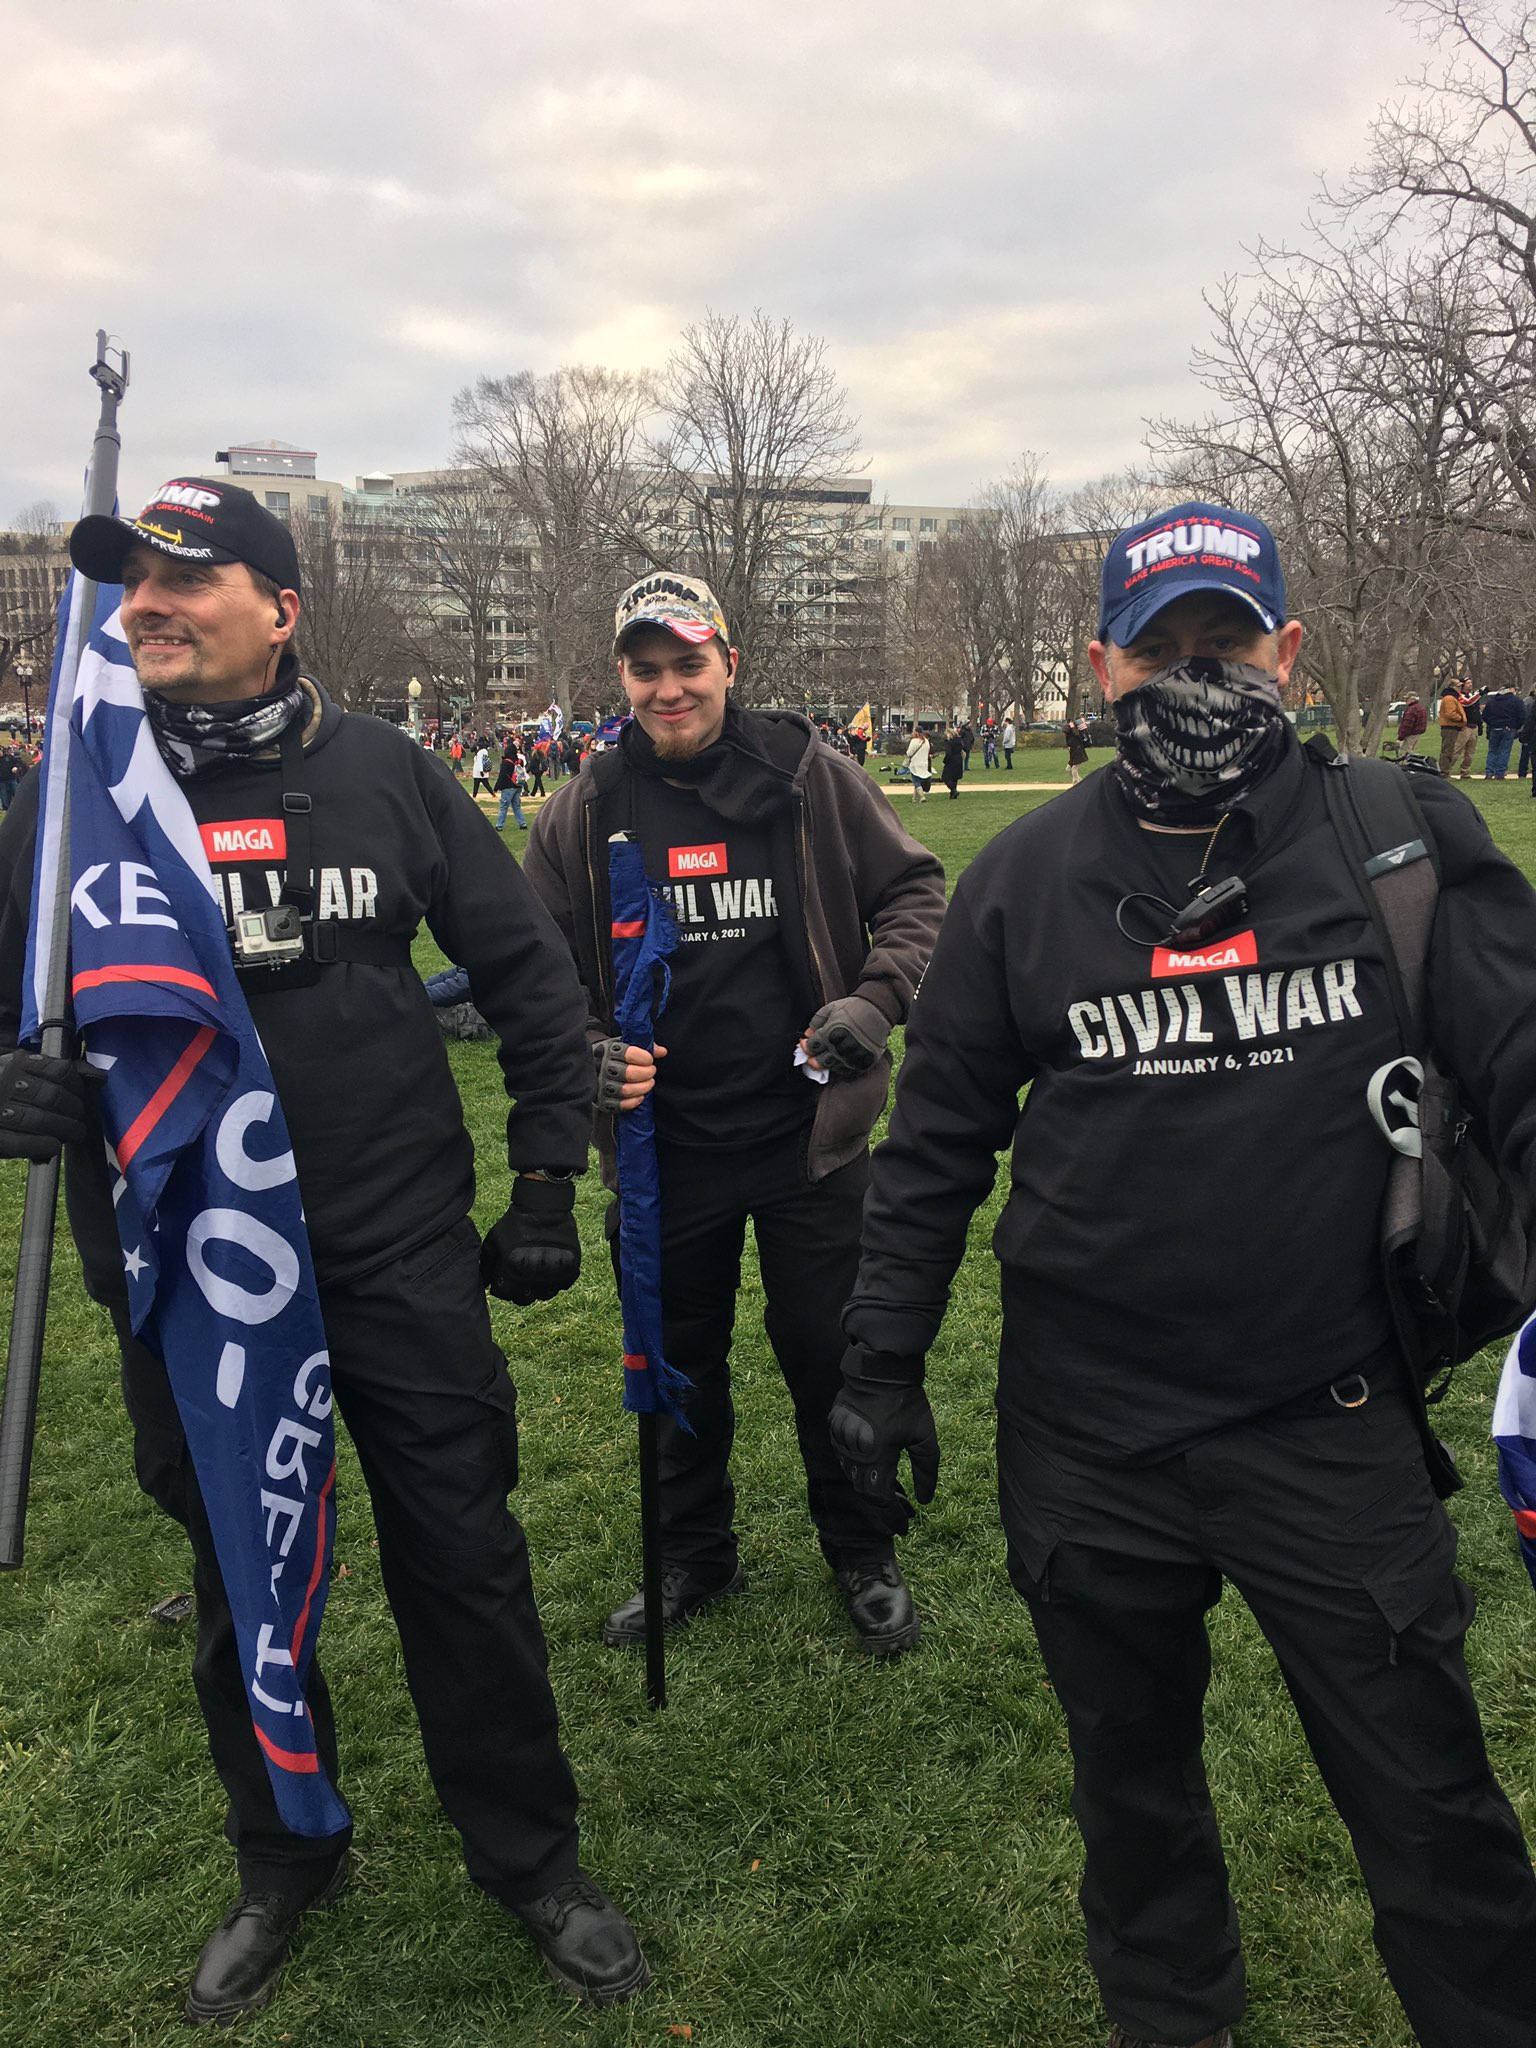 Trump terrorists wearing MAGA civil war sweatshirts